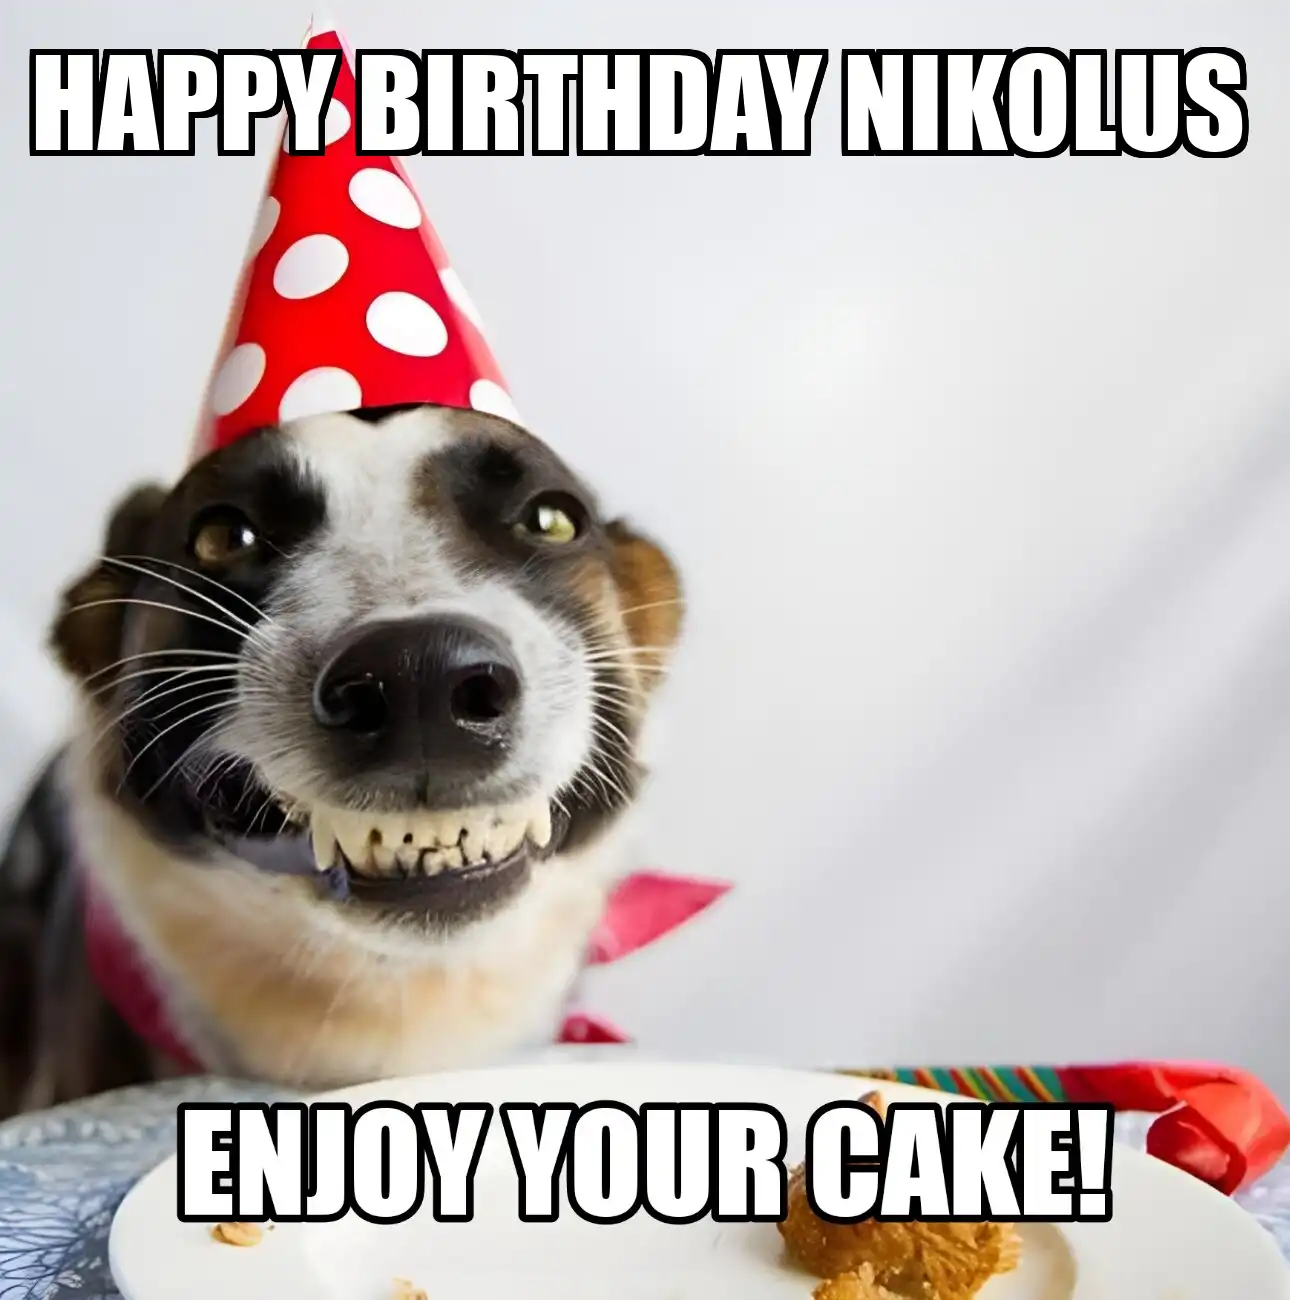 Happy Birthday Nikolus Enjoy Your Cake Dog Meme